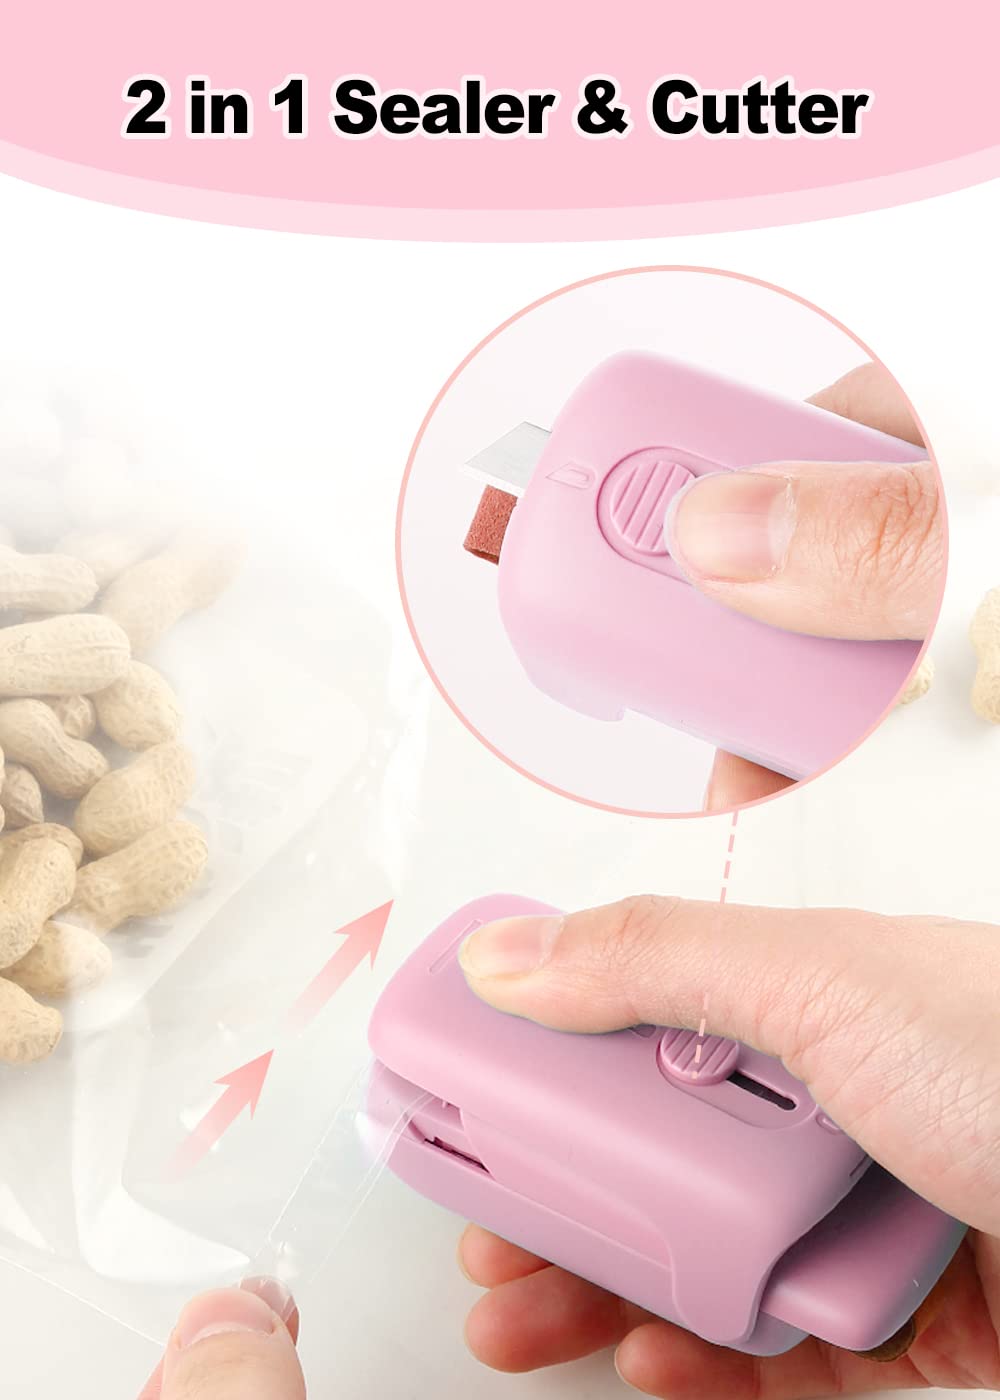 NOBVEQ Mini Bag Sealer, Handheld Heat Vacuum Sealer, Cutter with Lanyard and 2 in 1 Heat Sealer, Portable Bag Resealer Machine for Plastic Bags Food Storage Snacks Freshness(Batteries Included)-PINK